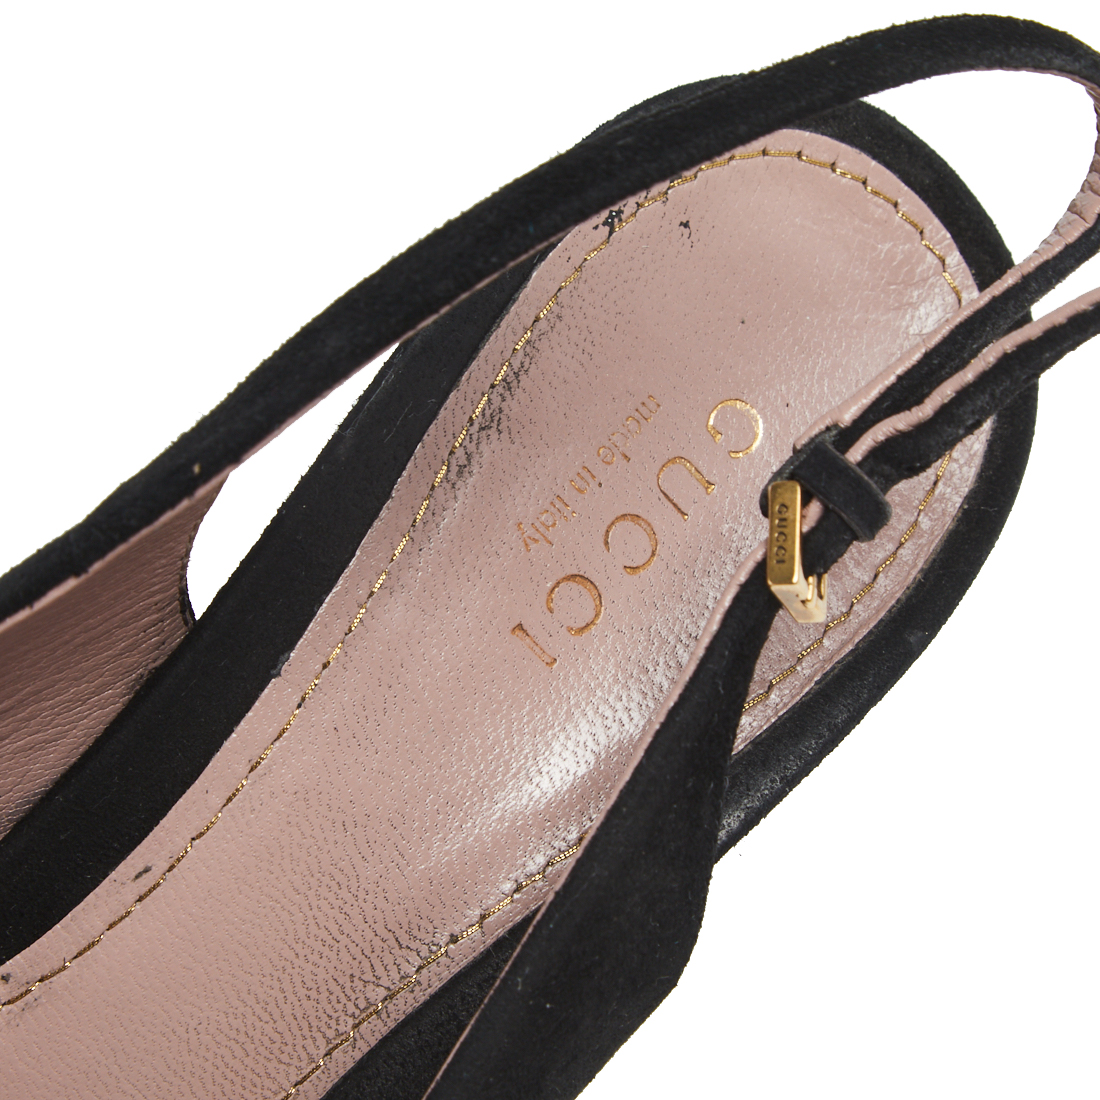 Gucci Black Suede Peep Toe Platform Slingback Sandals Size 36